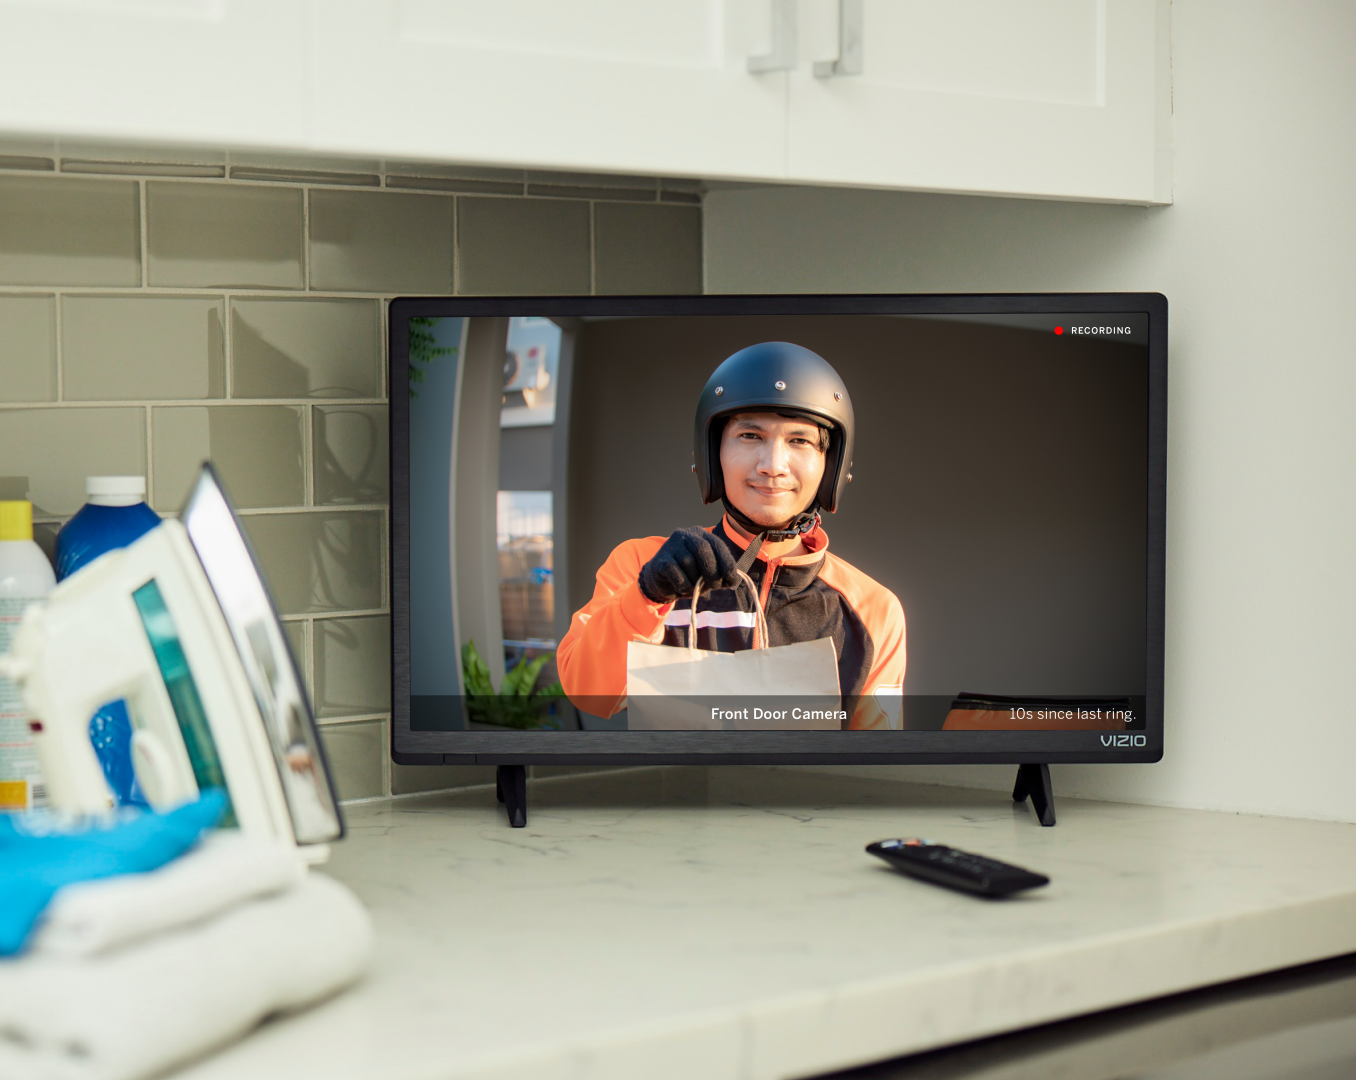 VIZIO D-Series™ 40” Class (39.5 Diag.) Smart TV